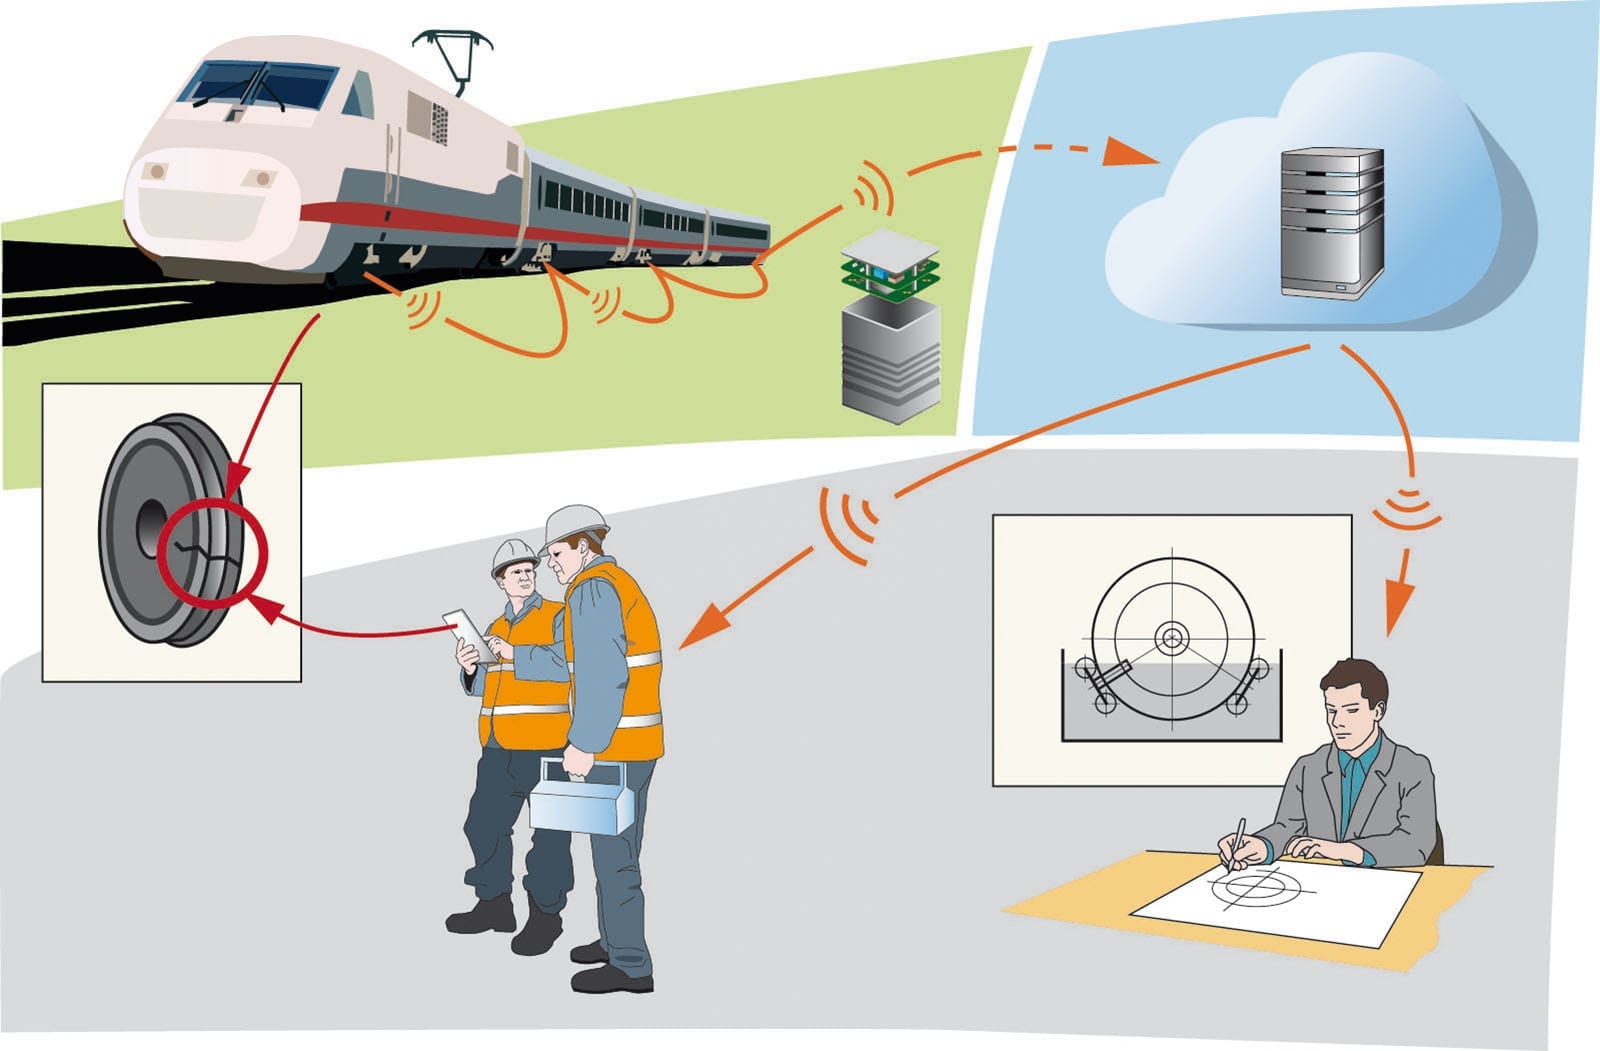 Sensors that improve rail transport safety